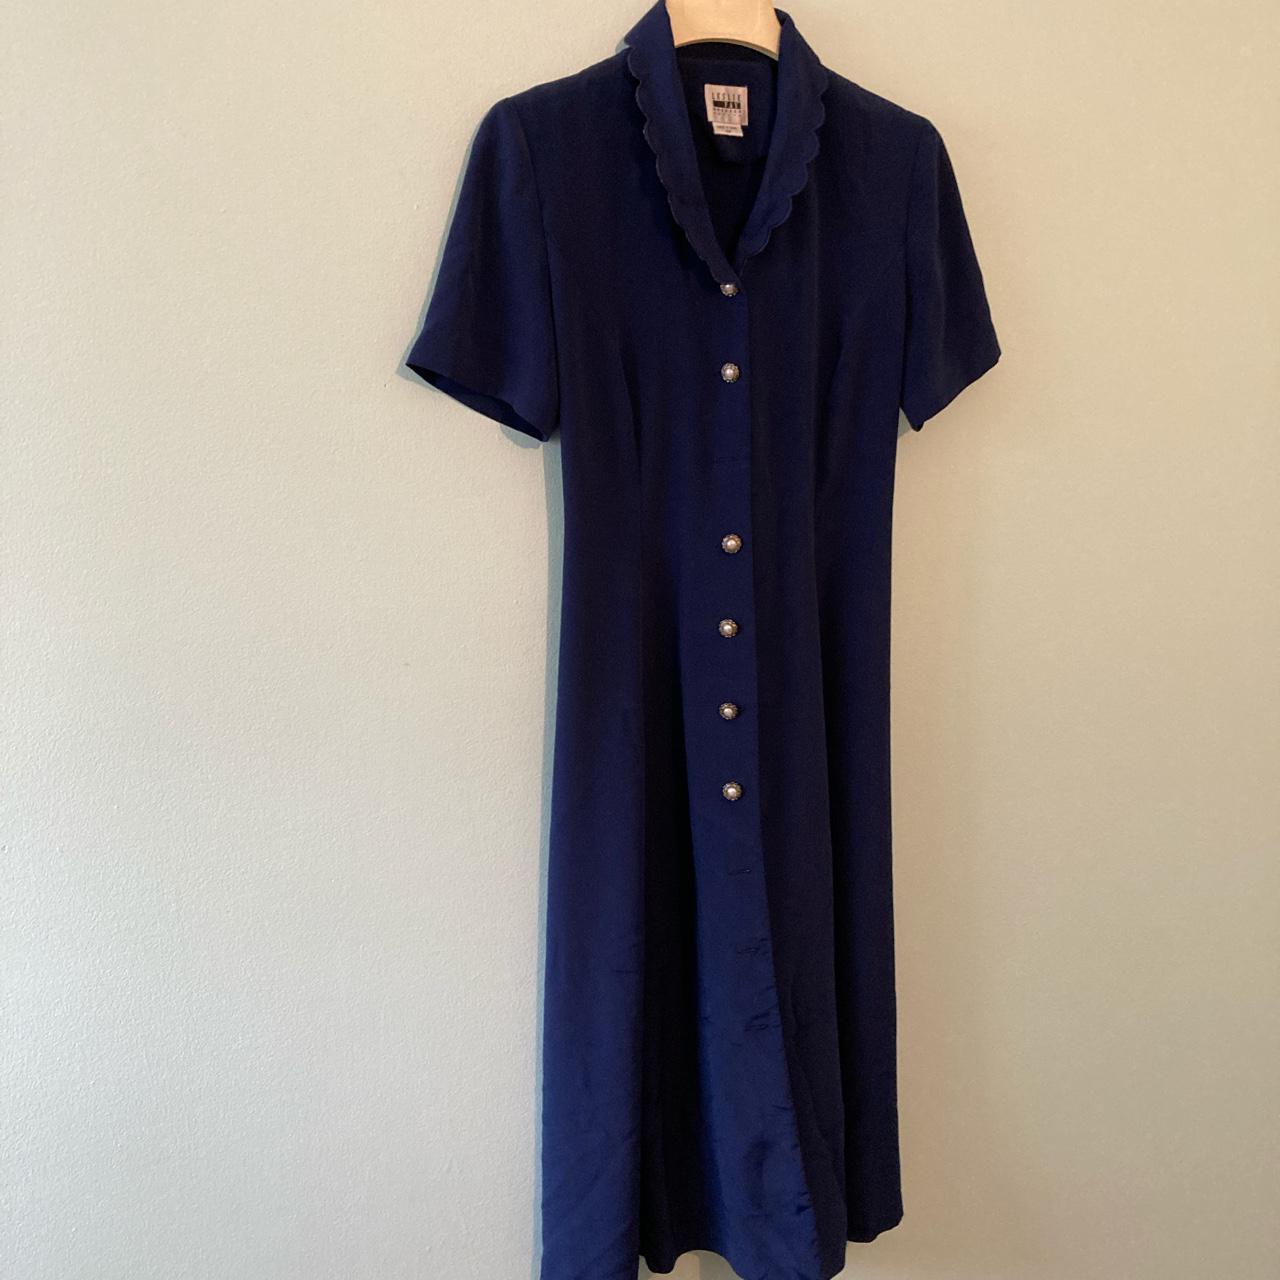 6397 Women's Blue and Navy Dress